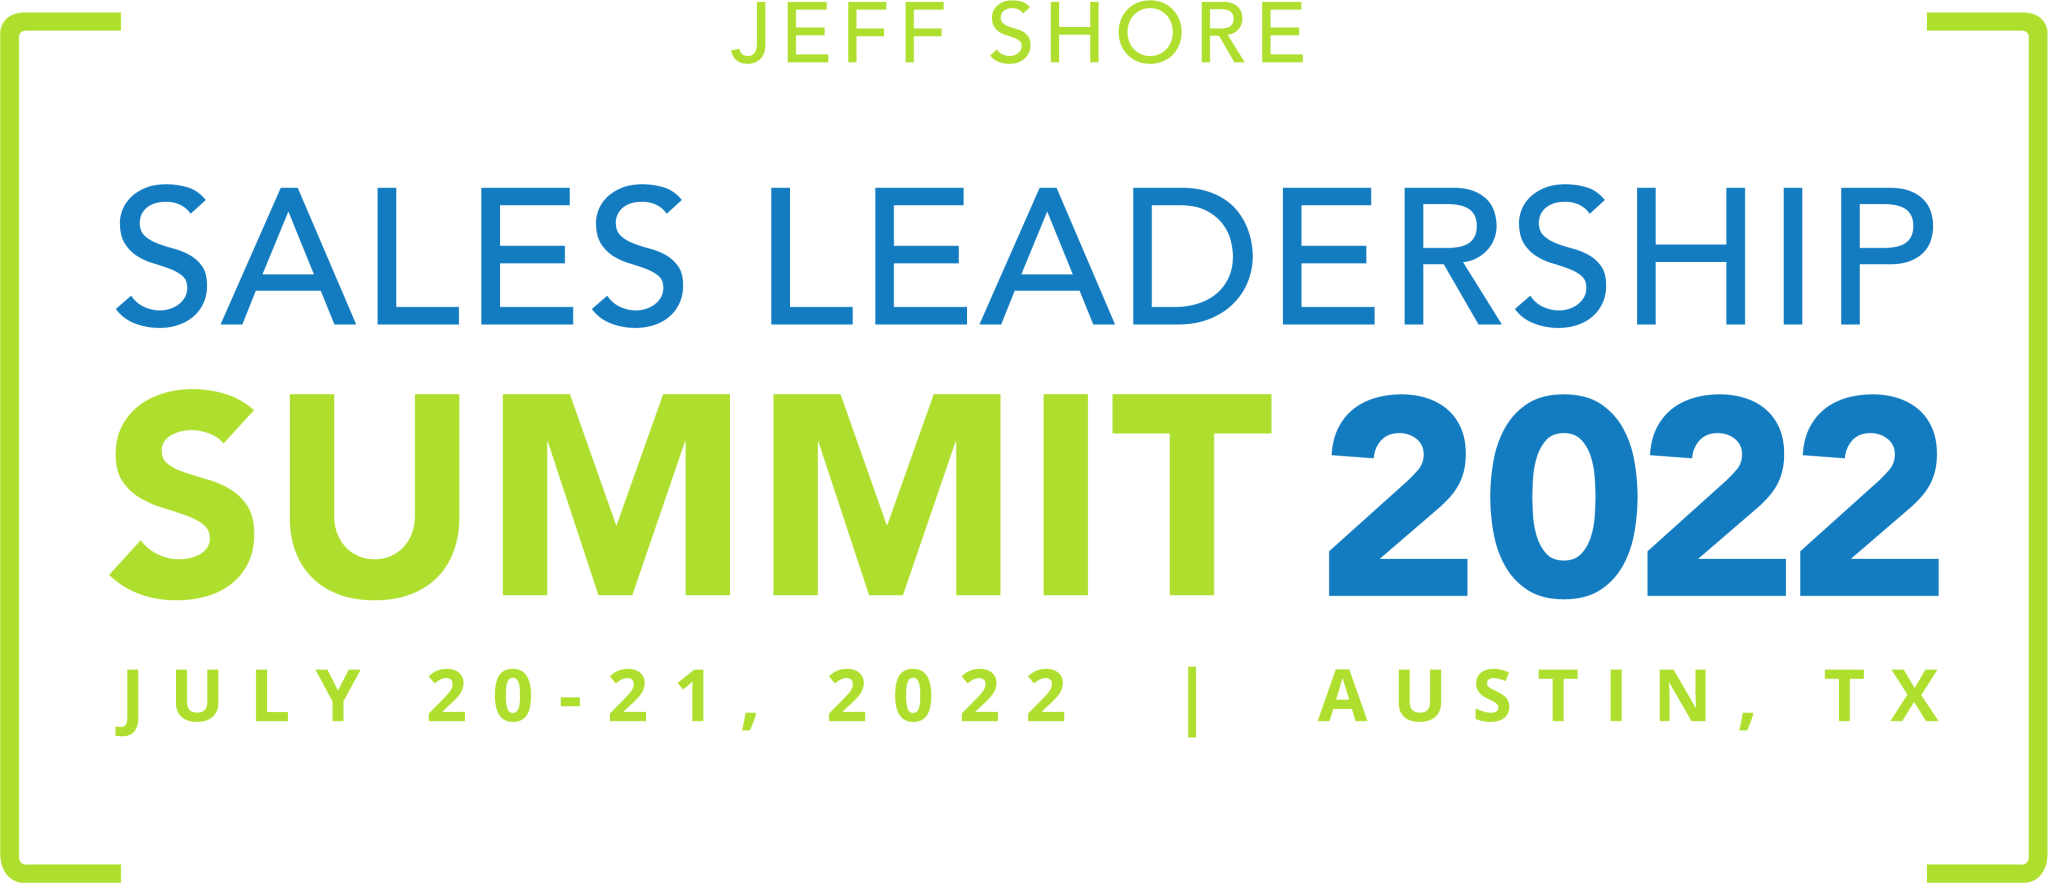 Jeff Shore Sales Leadership Summit 2022